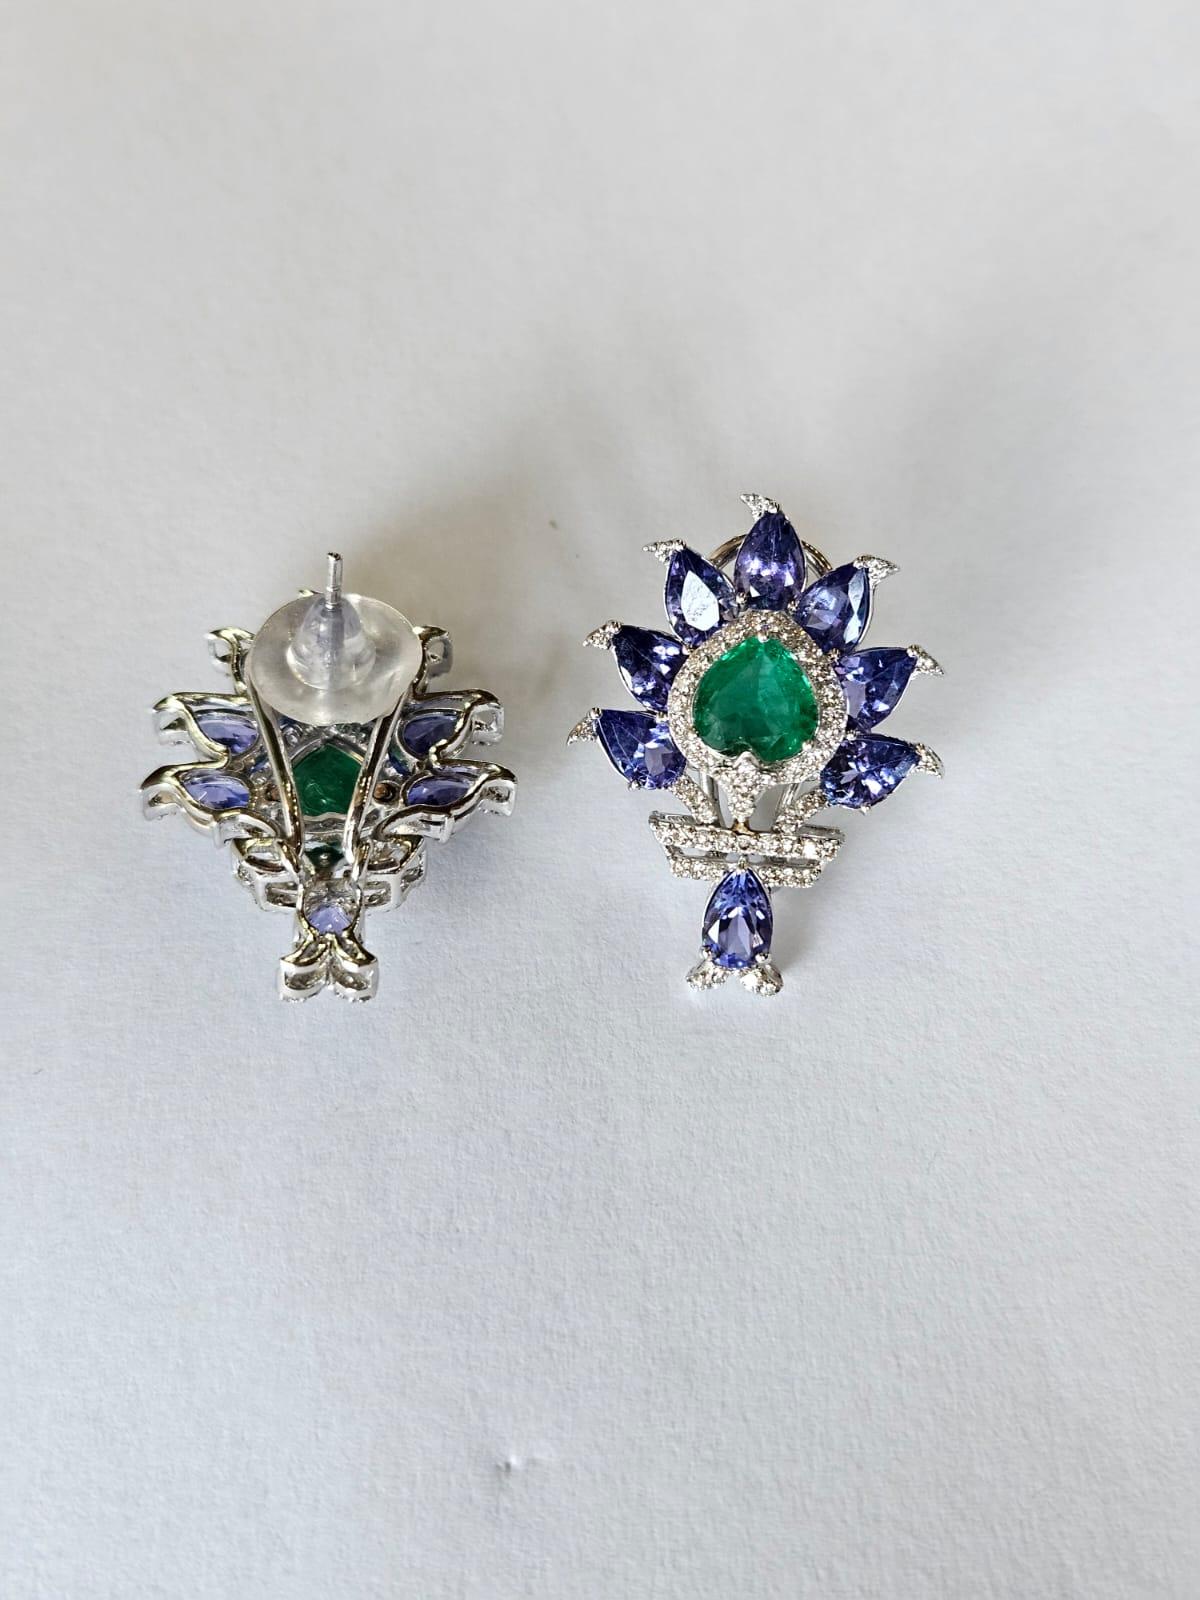 Modern Set in 18K Gold, natural Zambian Emeralds, Tanzanites & Diamonds Stud Earrings For Sale